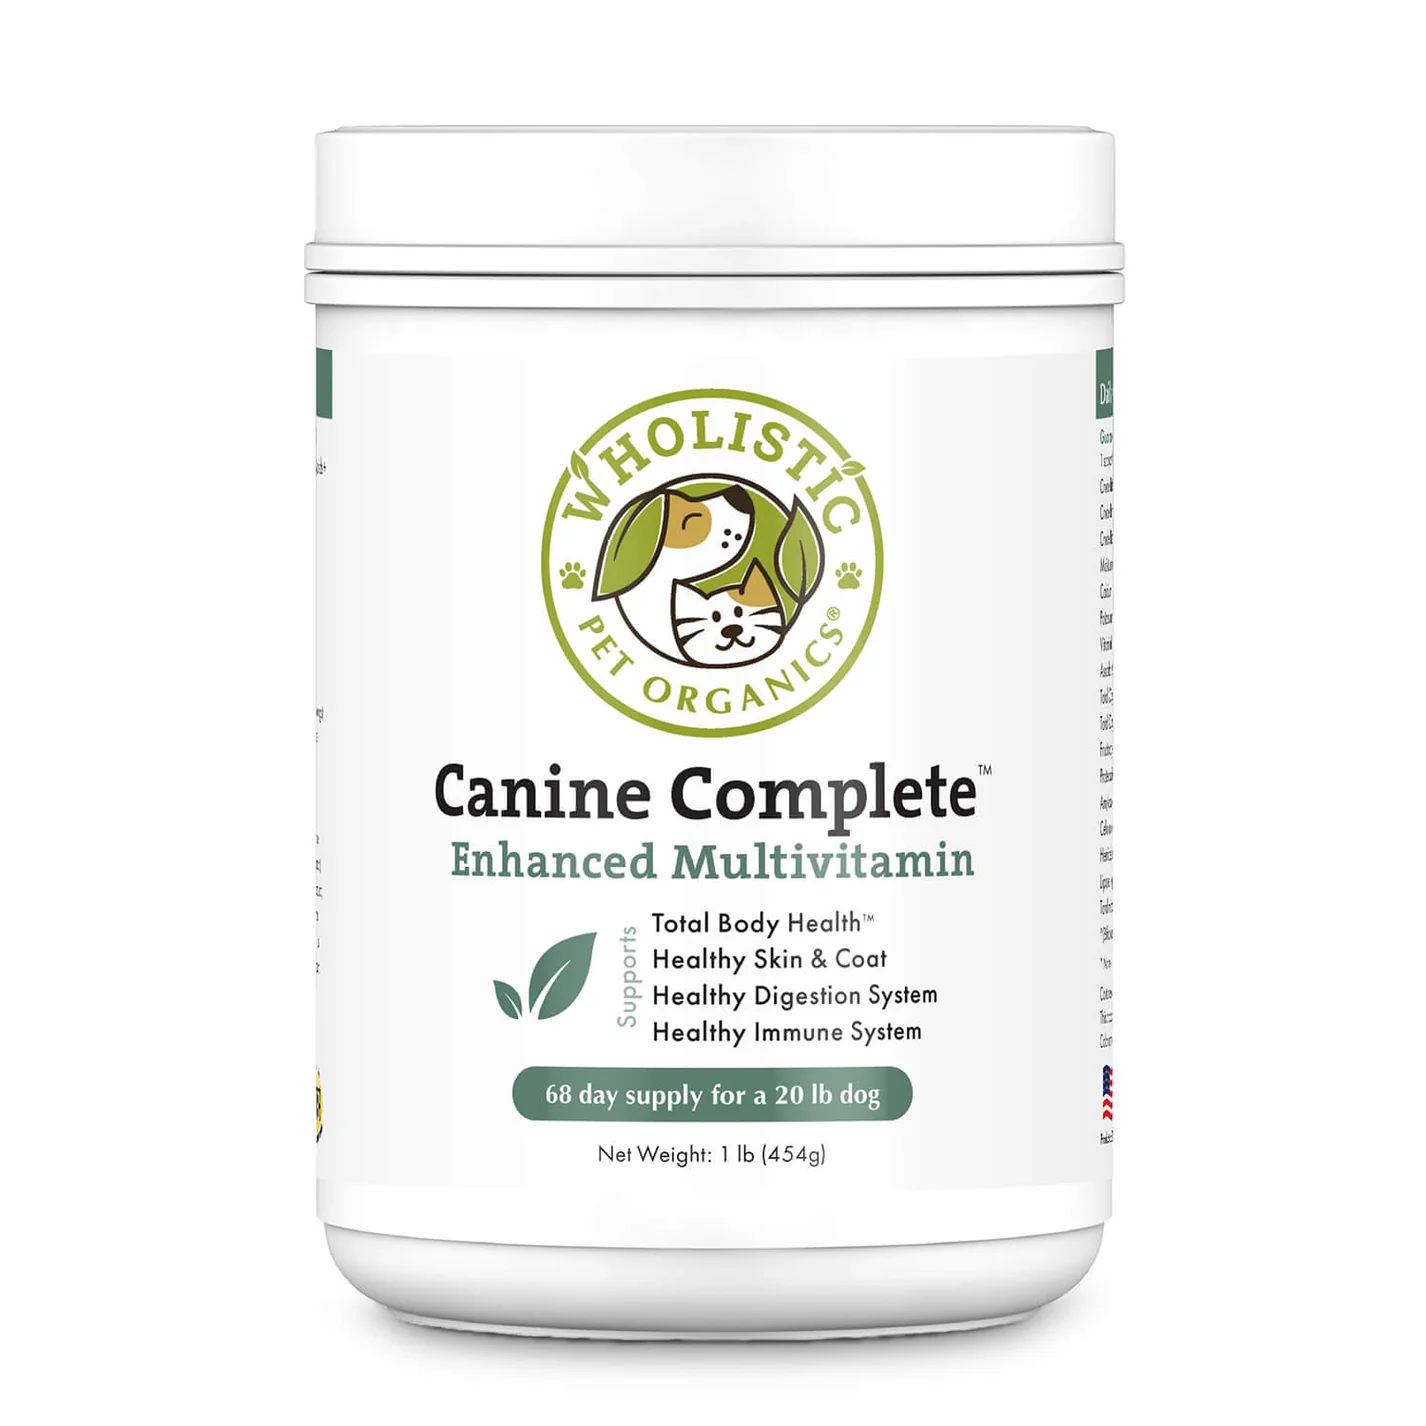 Wholistic Pet Organics Canine Complete Enhanced Multivitamin Powder